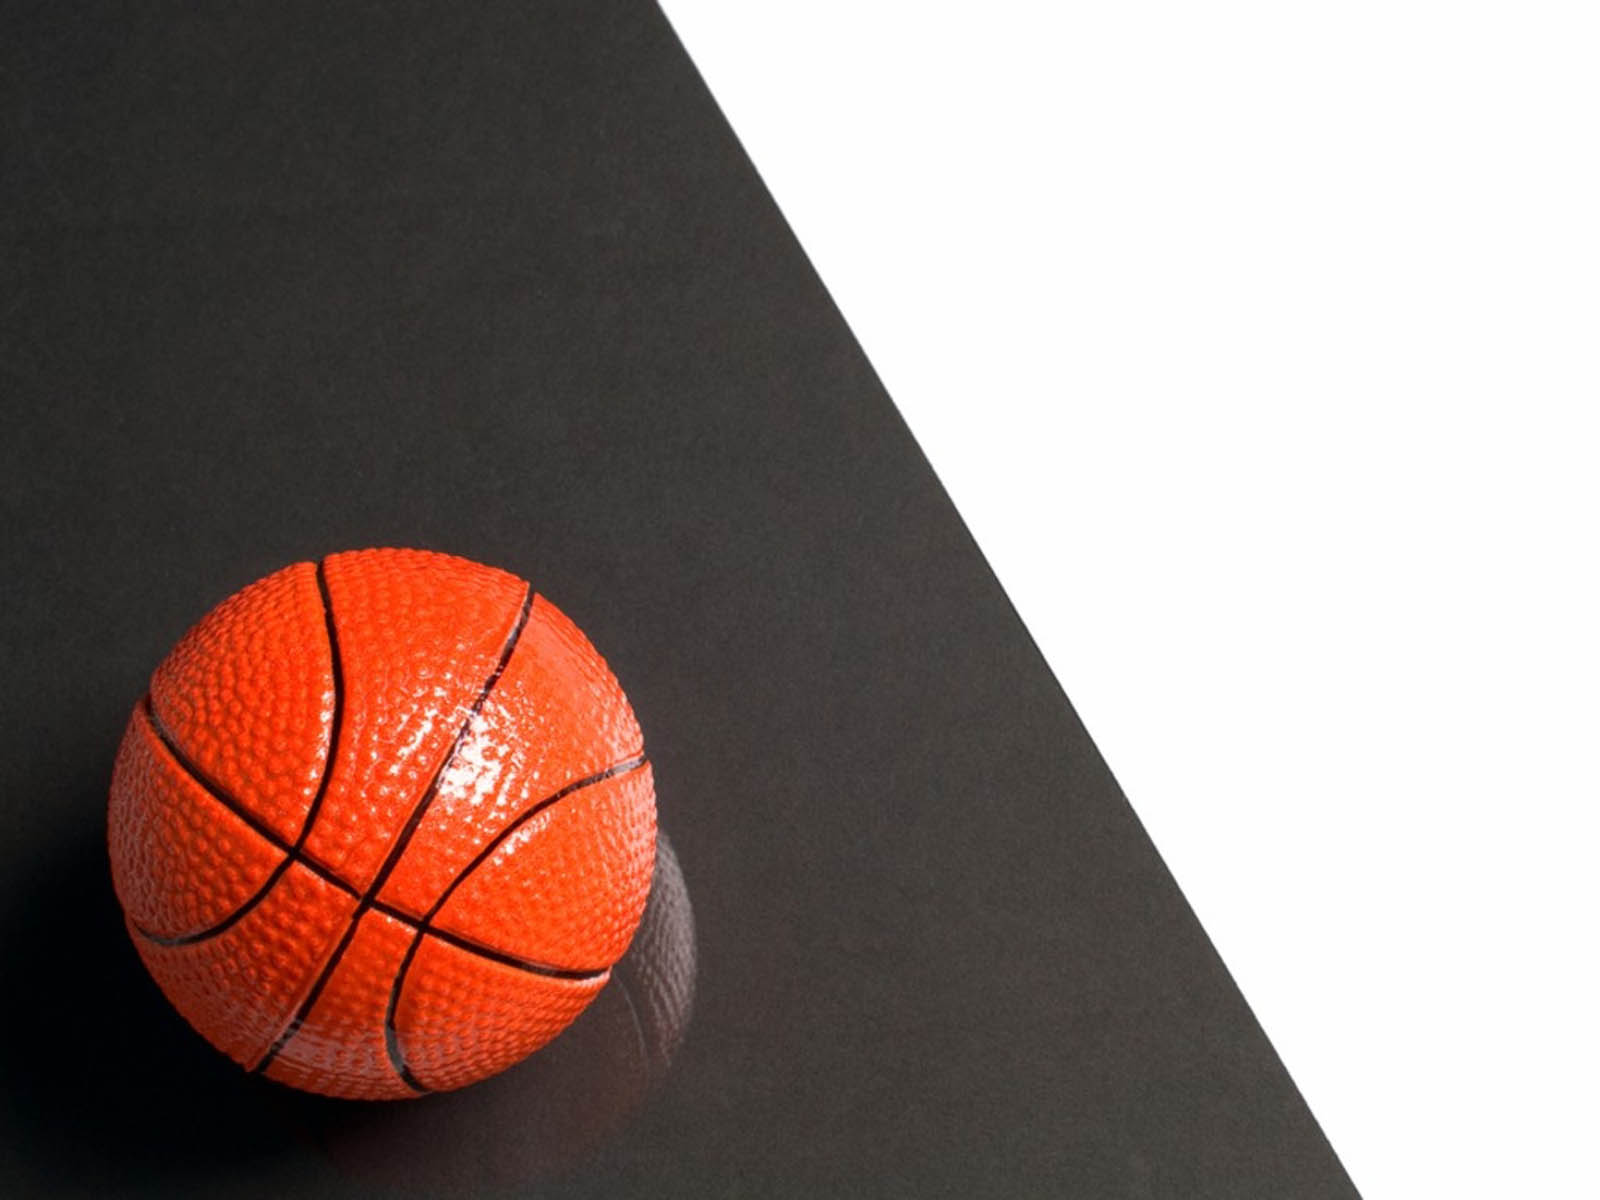 pelota de baloncesto,baloncesto,baloncesto,naranja,cancha de baloncesto,equipo deportivo